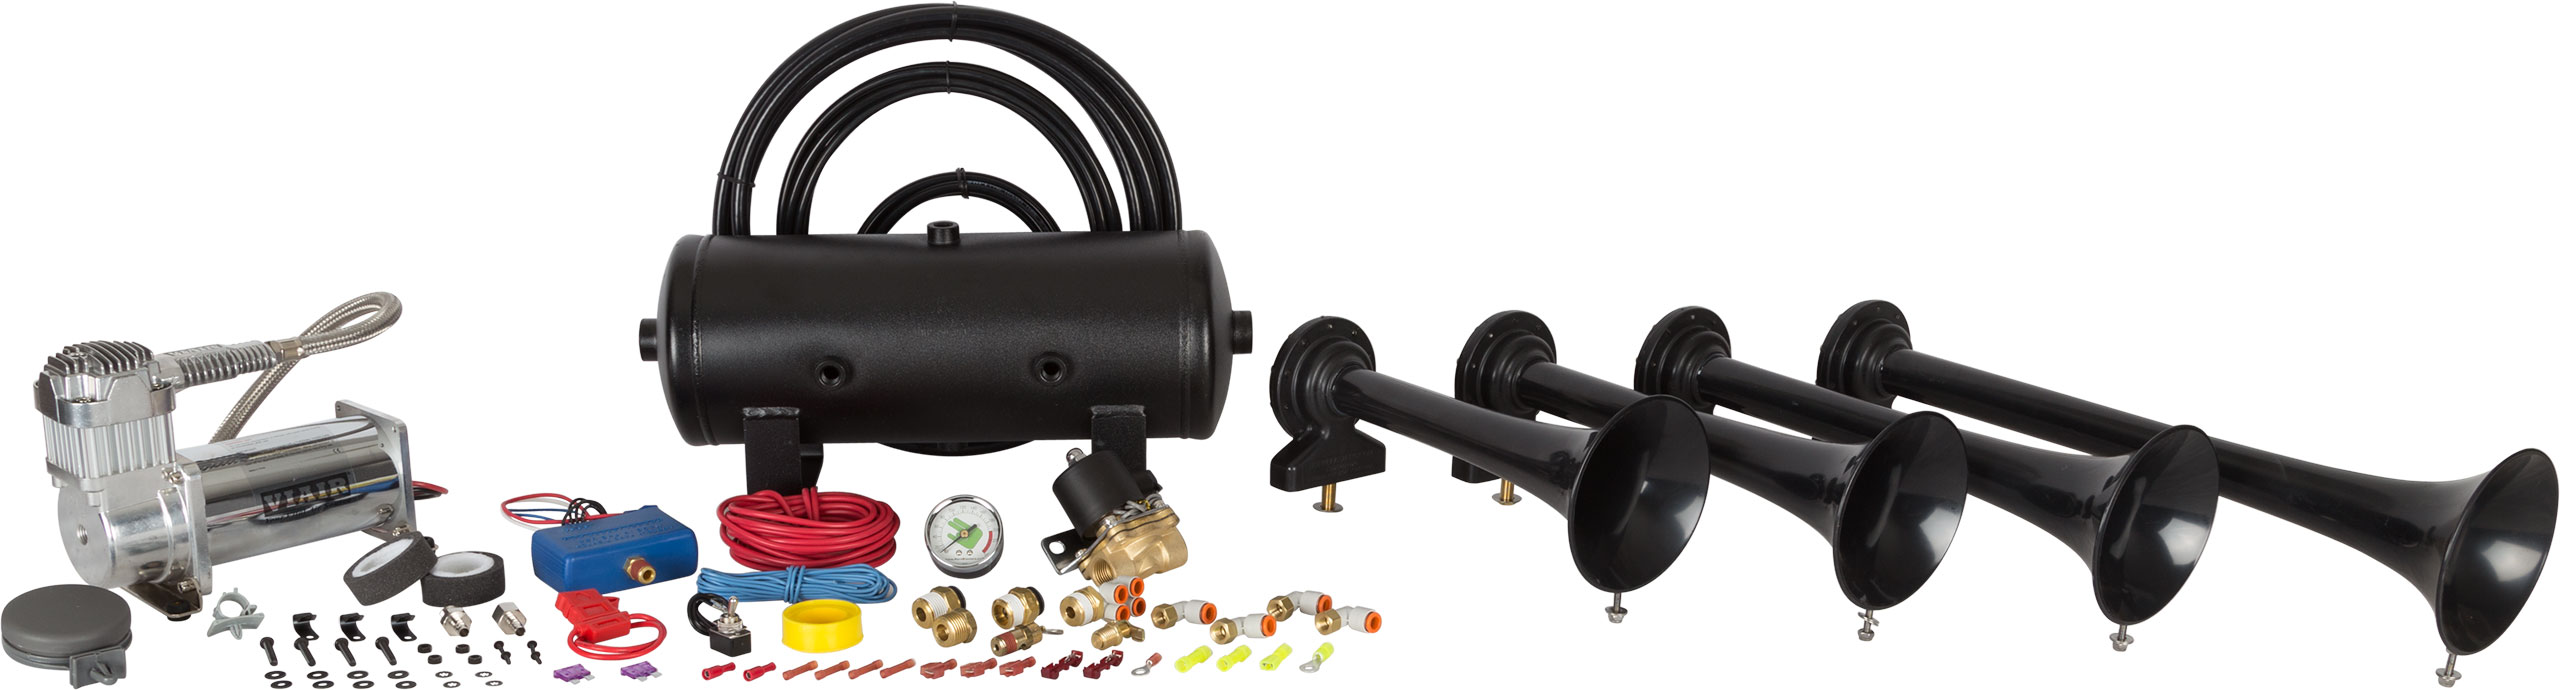 Complete Air Horn Kits for Sale  Air Horn Kits for Trucks – HornBlasters